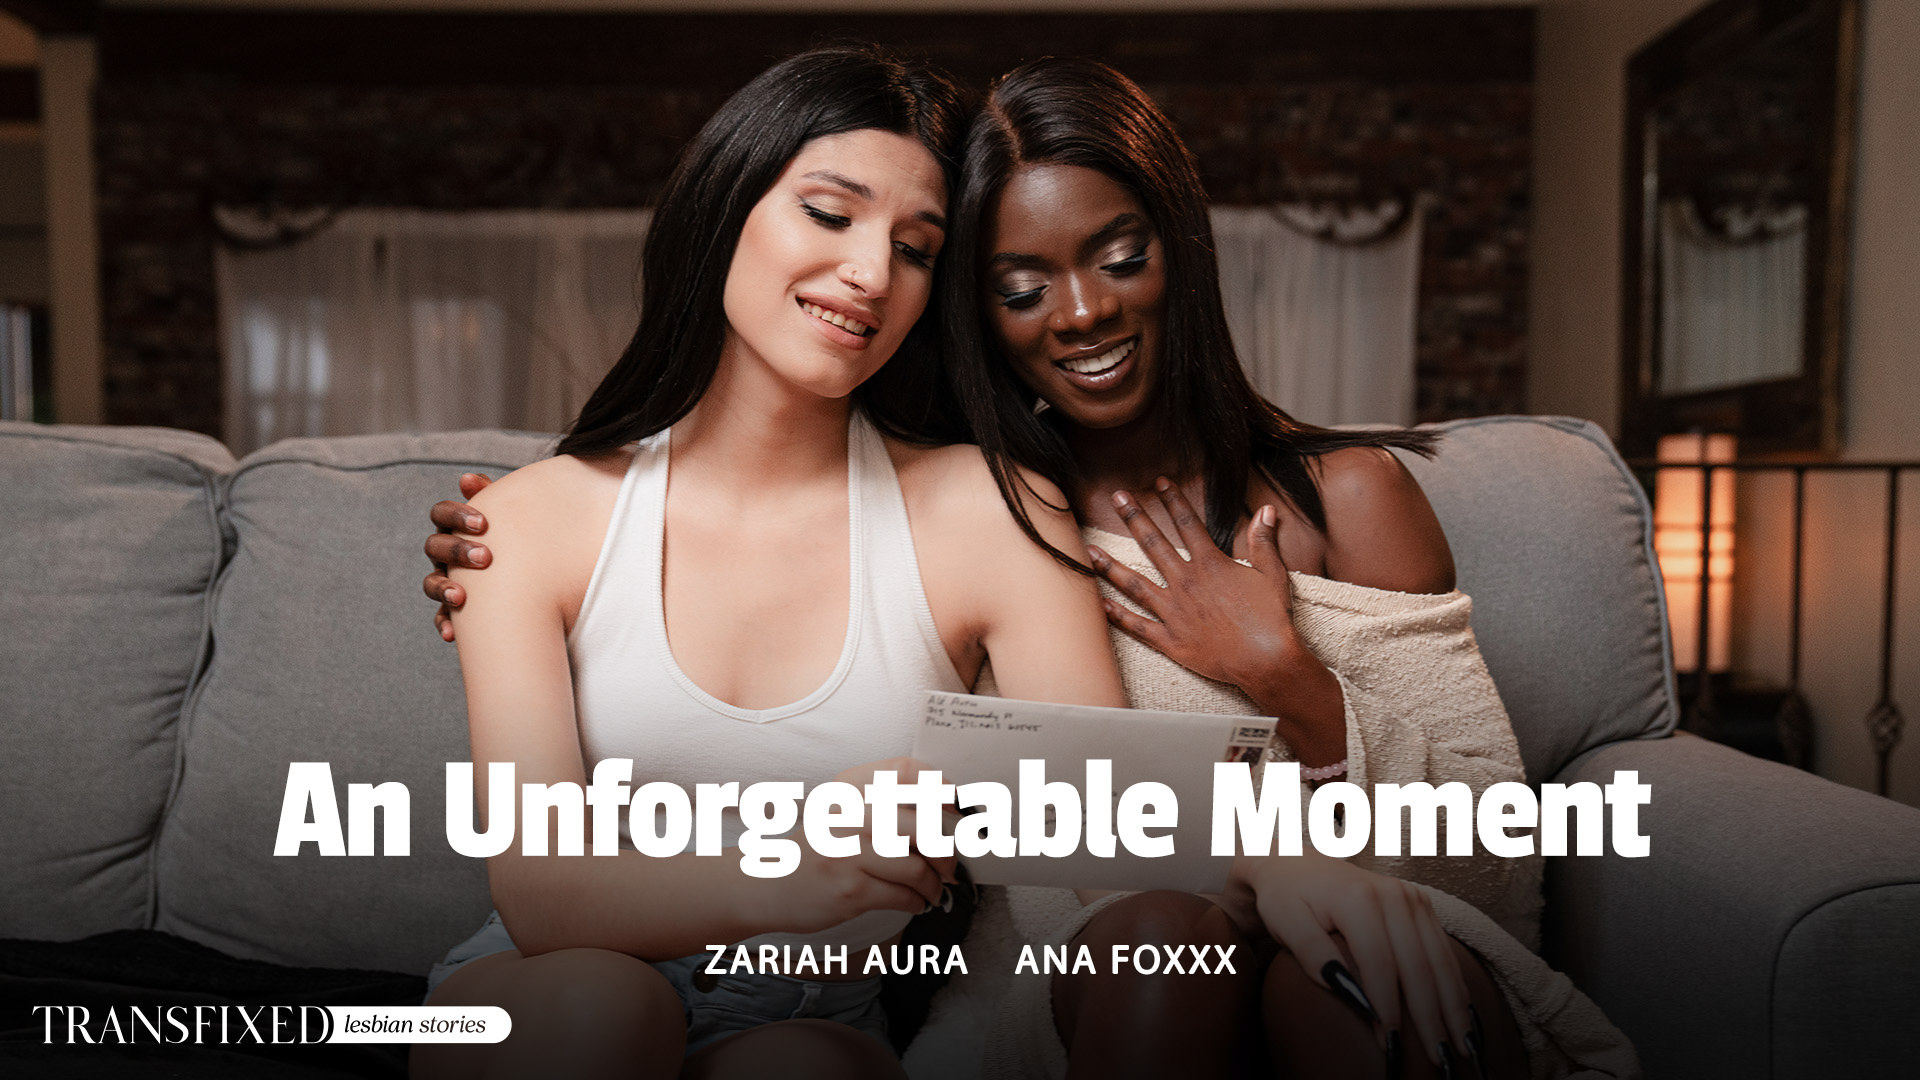 Transfixed Ana Foxxx, Zariah Aura An Unforgettable Moment